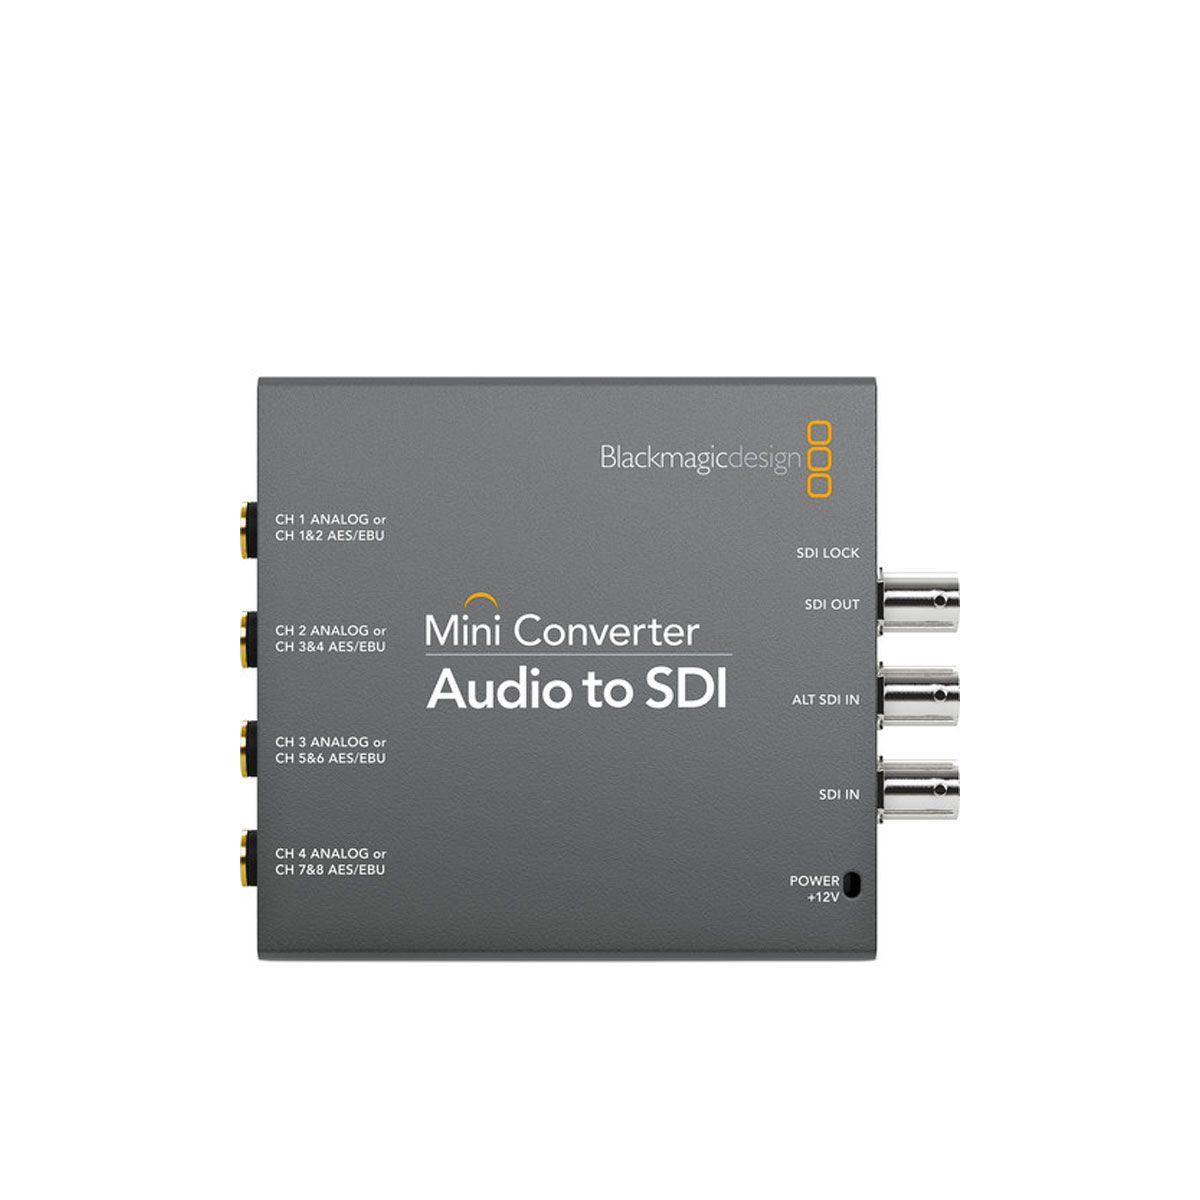  BlackMagic Mini Converter - Audio to SDI 2 